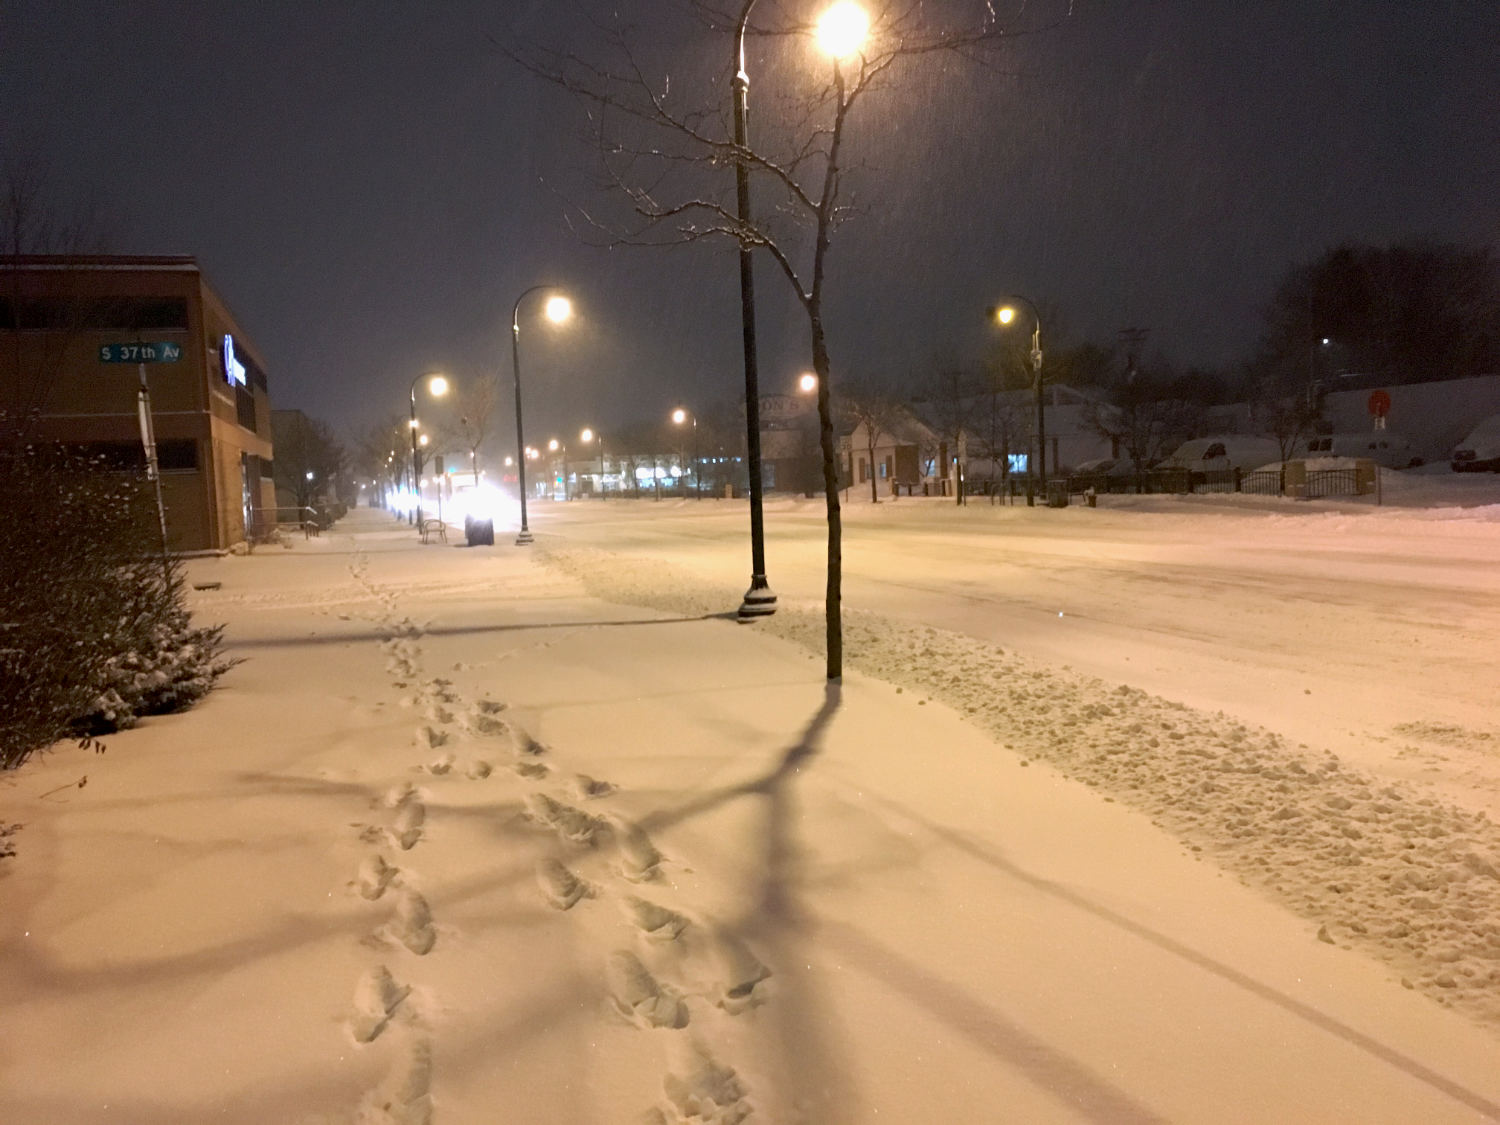 footsteps through snow-covered sidewalk with snowy street under streetlights in the dark